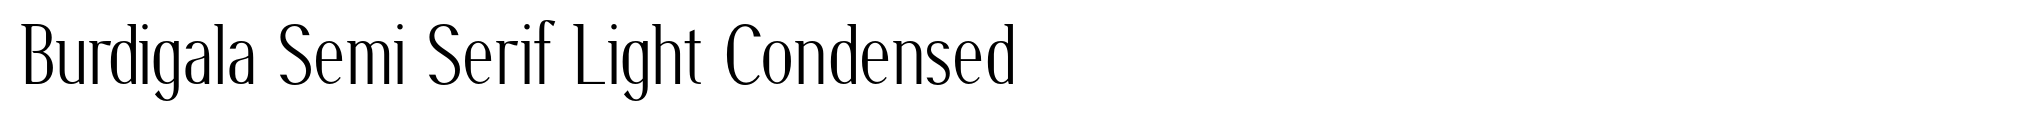 Burdigala Semi Serif Light Condensed image